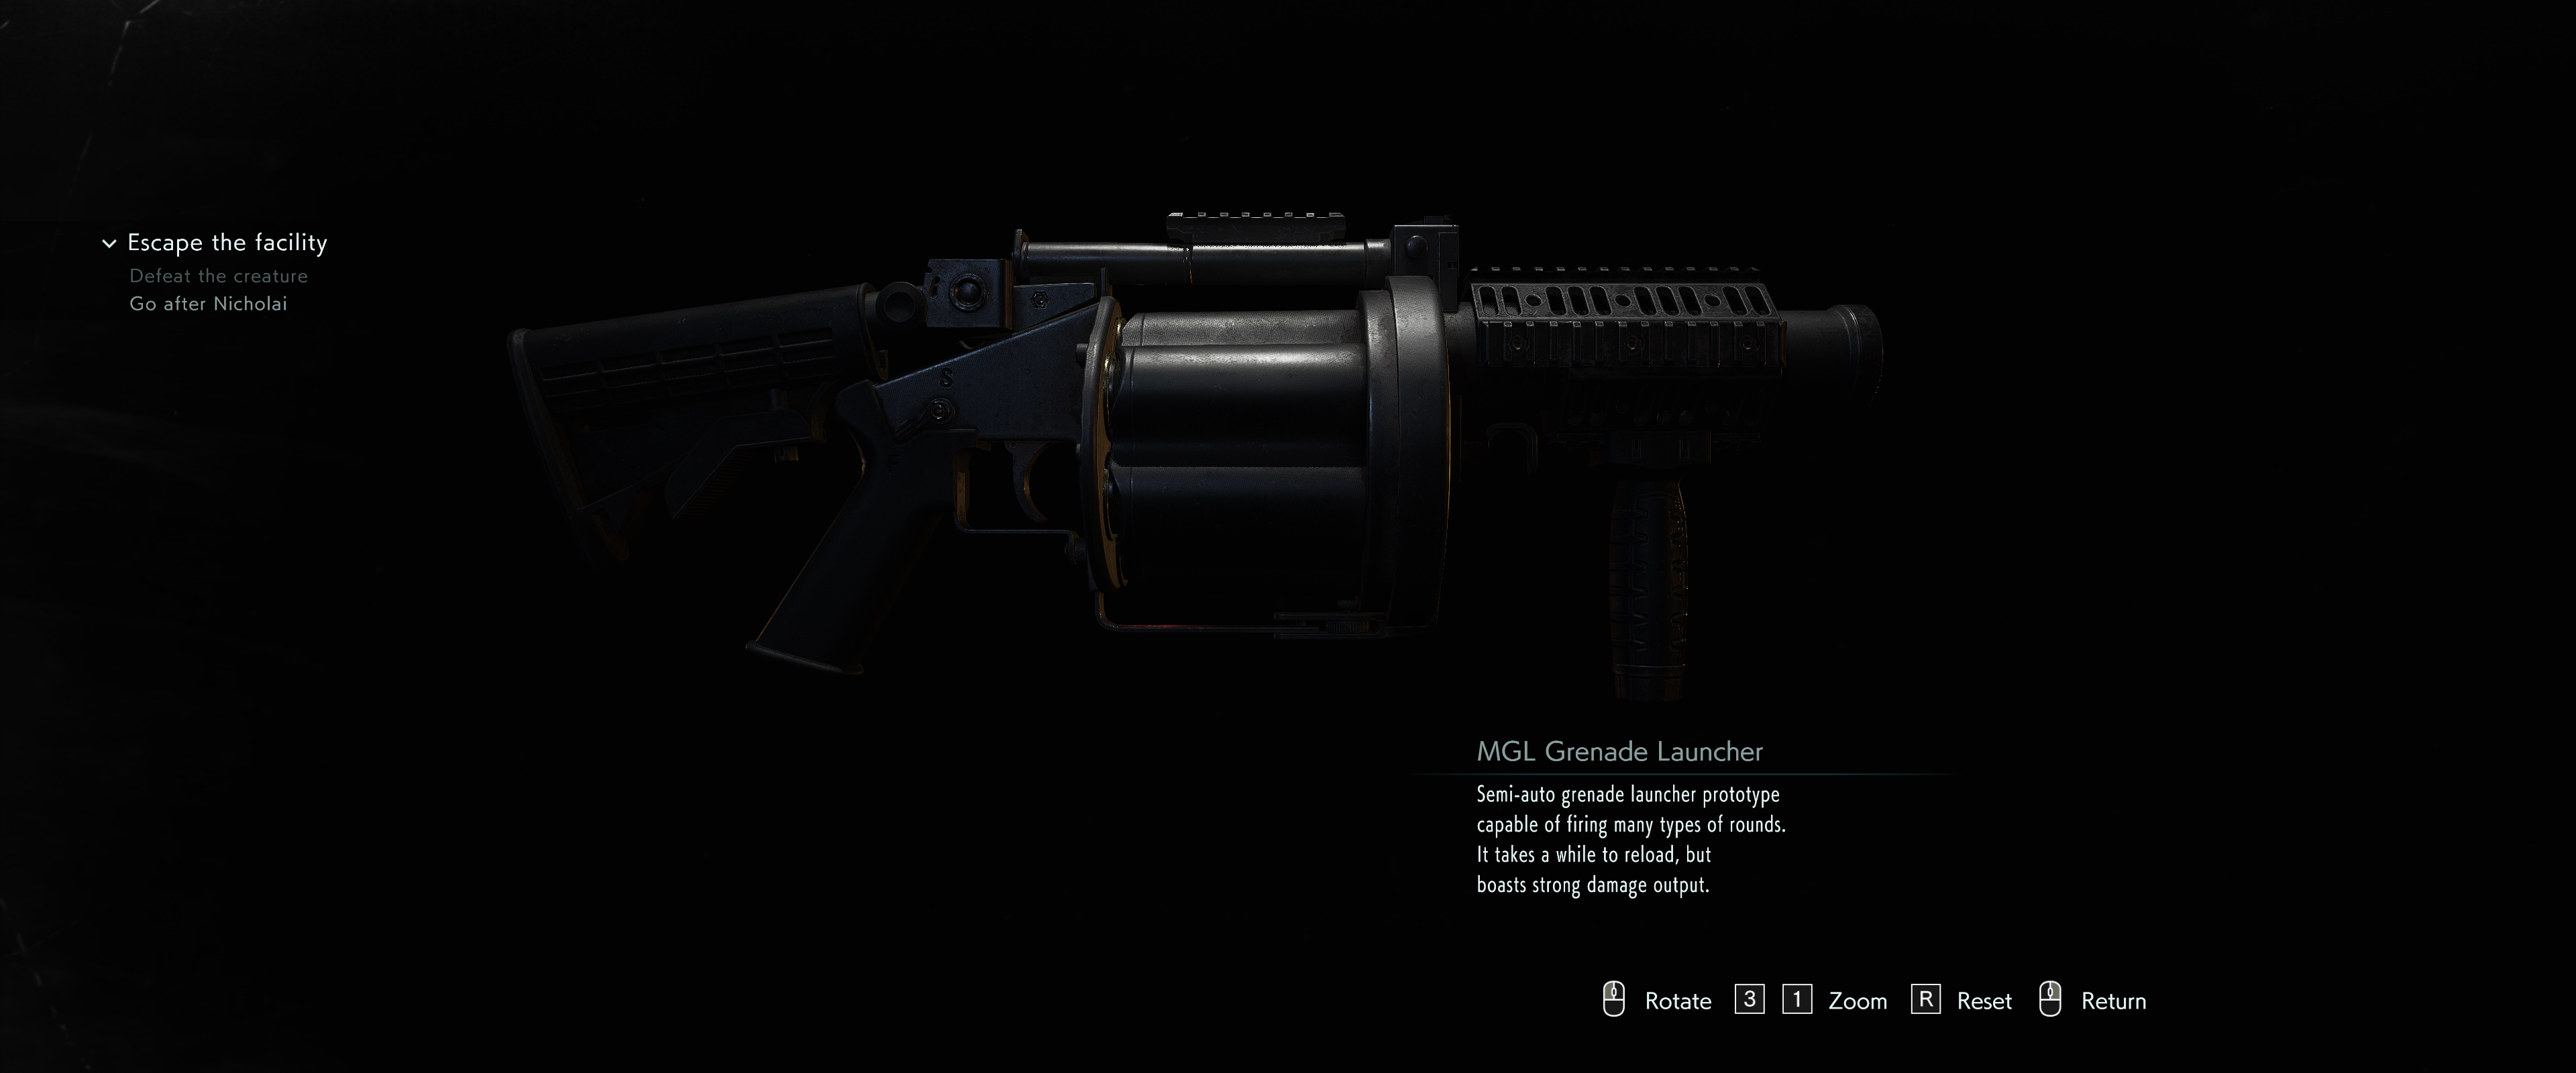 Mgl Grenade Launcher Resident Evil Wiki Fandom